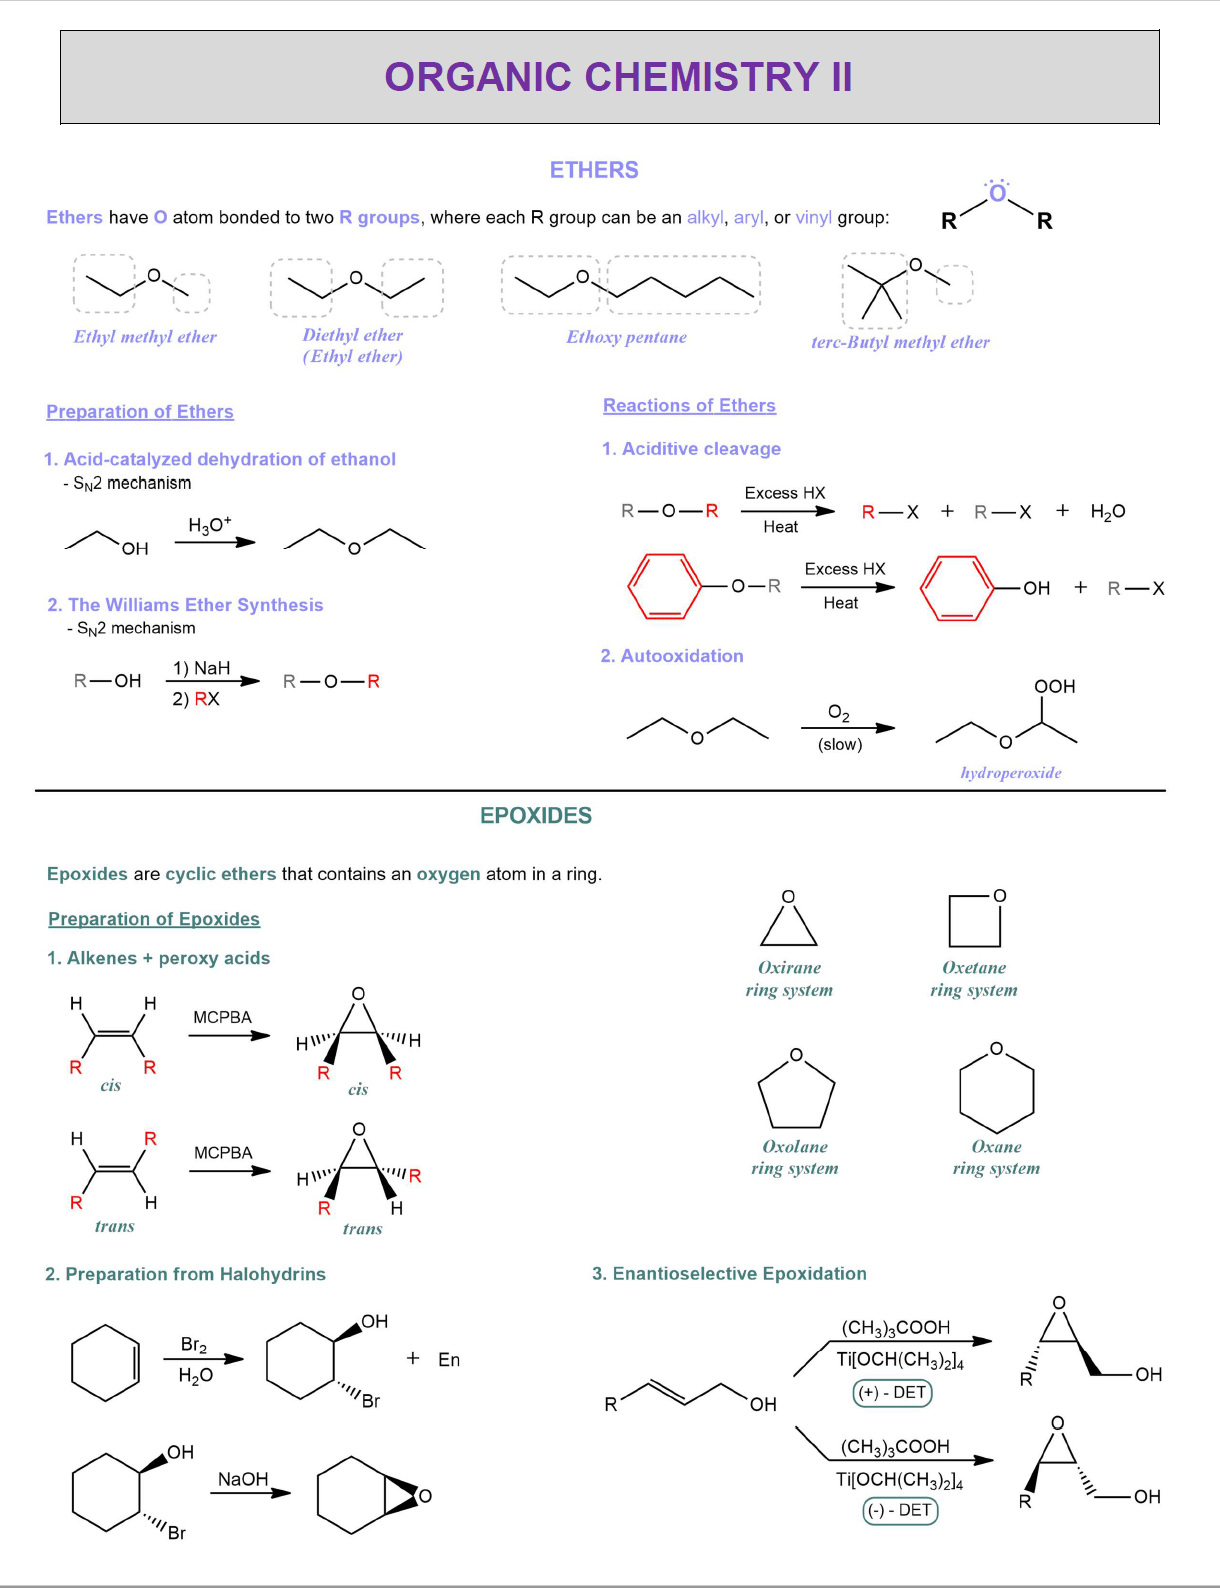 organic-chemistry-ii-cheat-sheet-learn-chemistry-online-chemistryscore